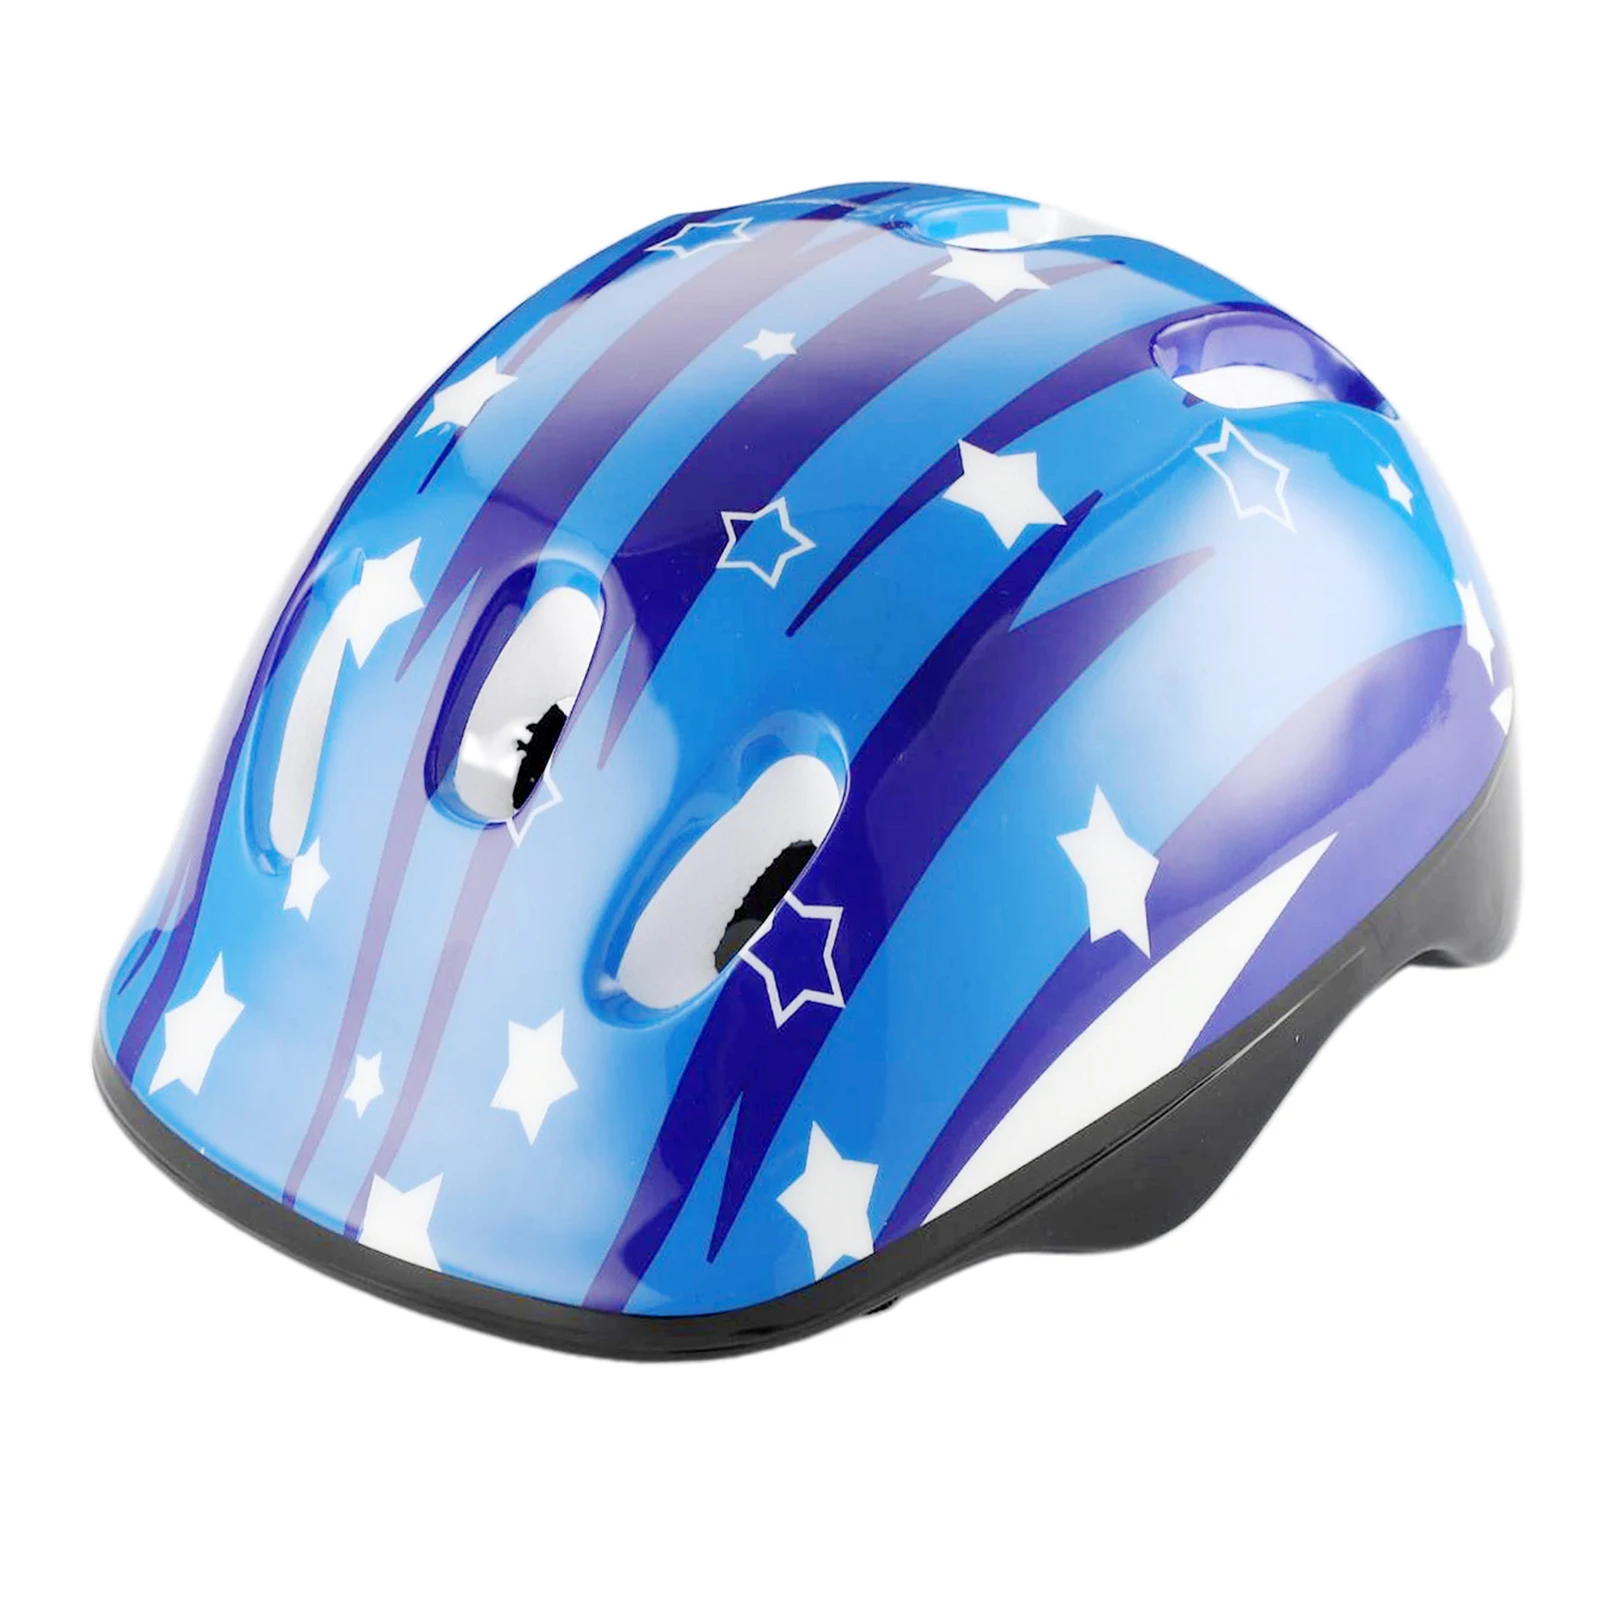 For Kids Child Baby Toddler Safety-Helmet Bike Bicycle Skate Board Scooter Sport 